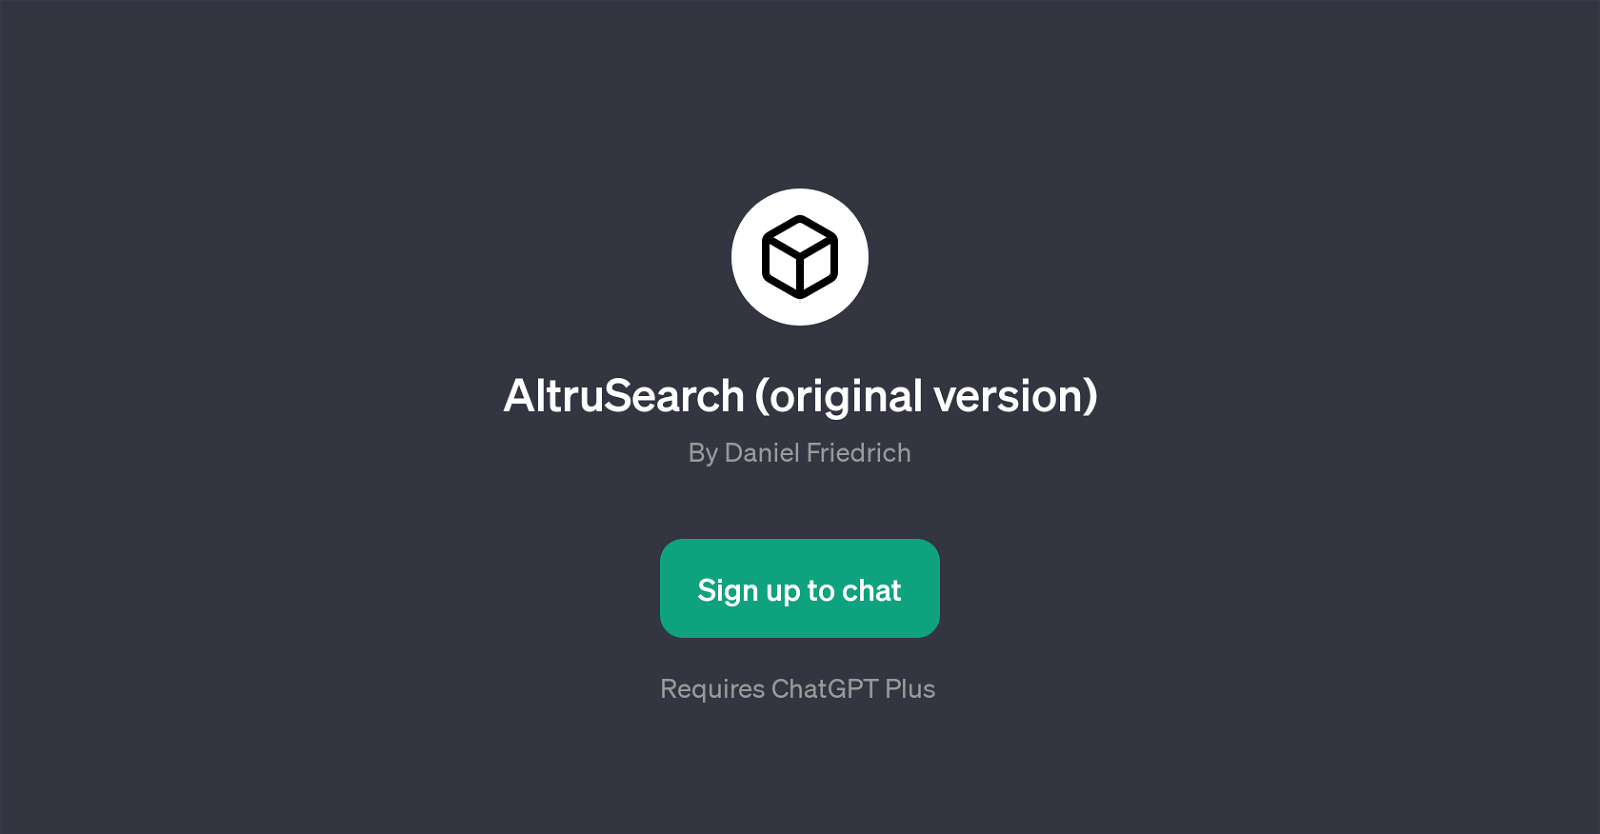 AltruSearch (original version) website